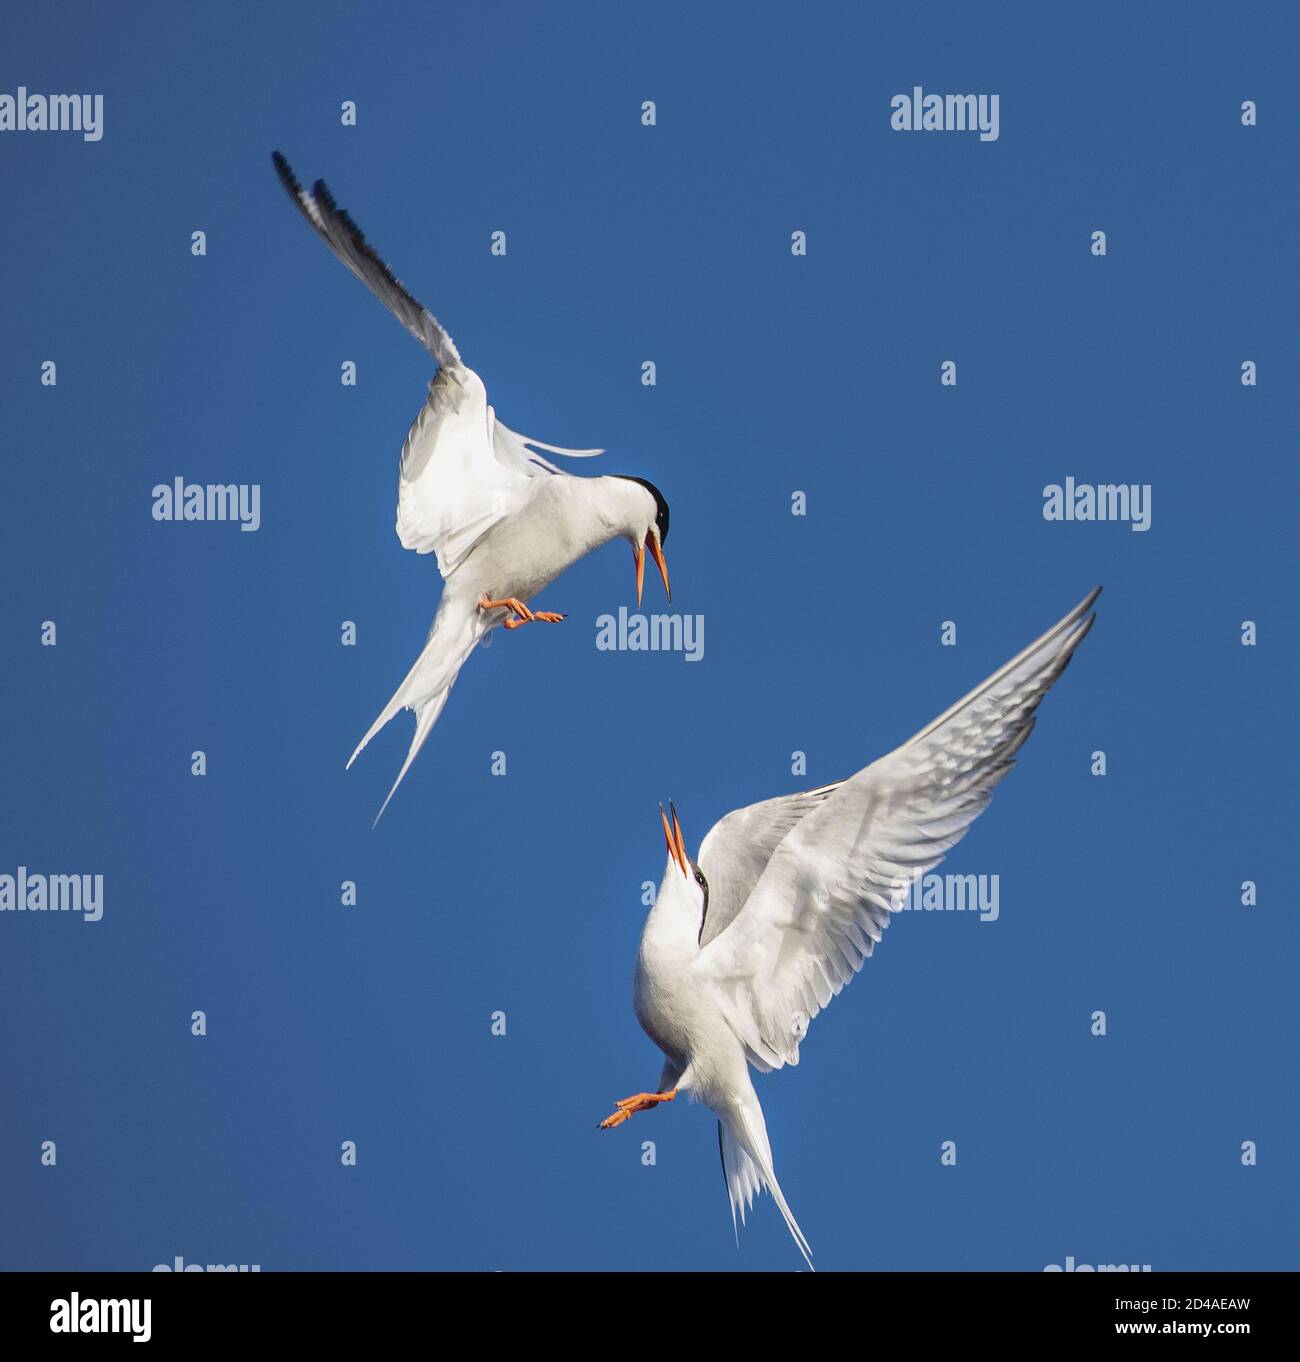 Dans le ciel. Terns communs interagissant en vol. Des sternes adultes en vol sur fond bleu ciel. Nom scientifique: Sterna hirundo Banque D'Images